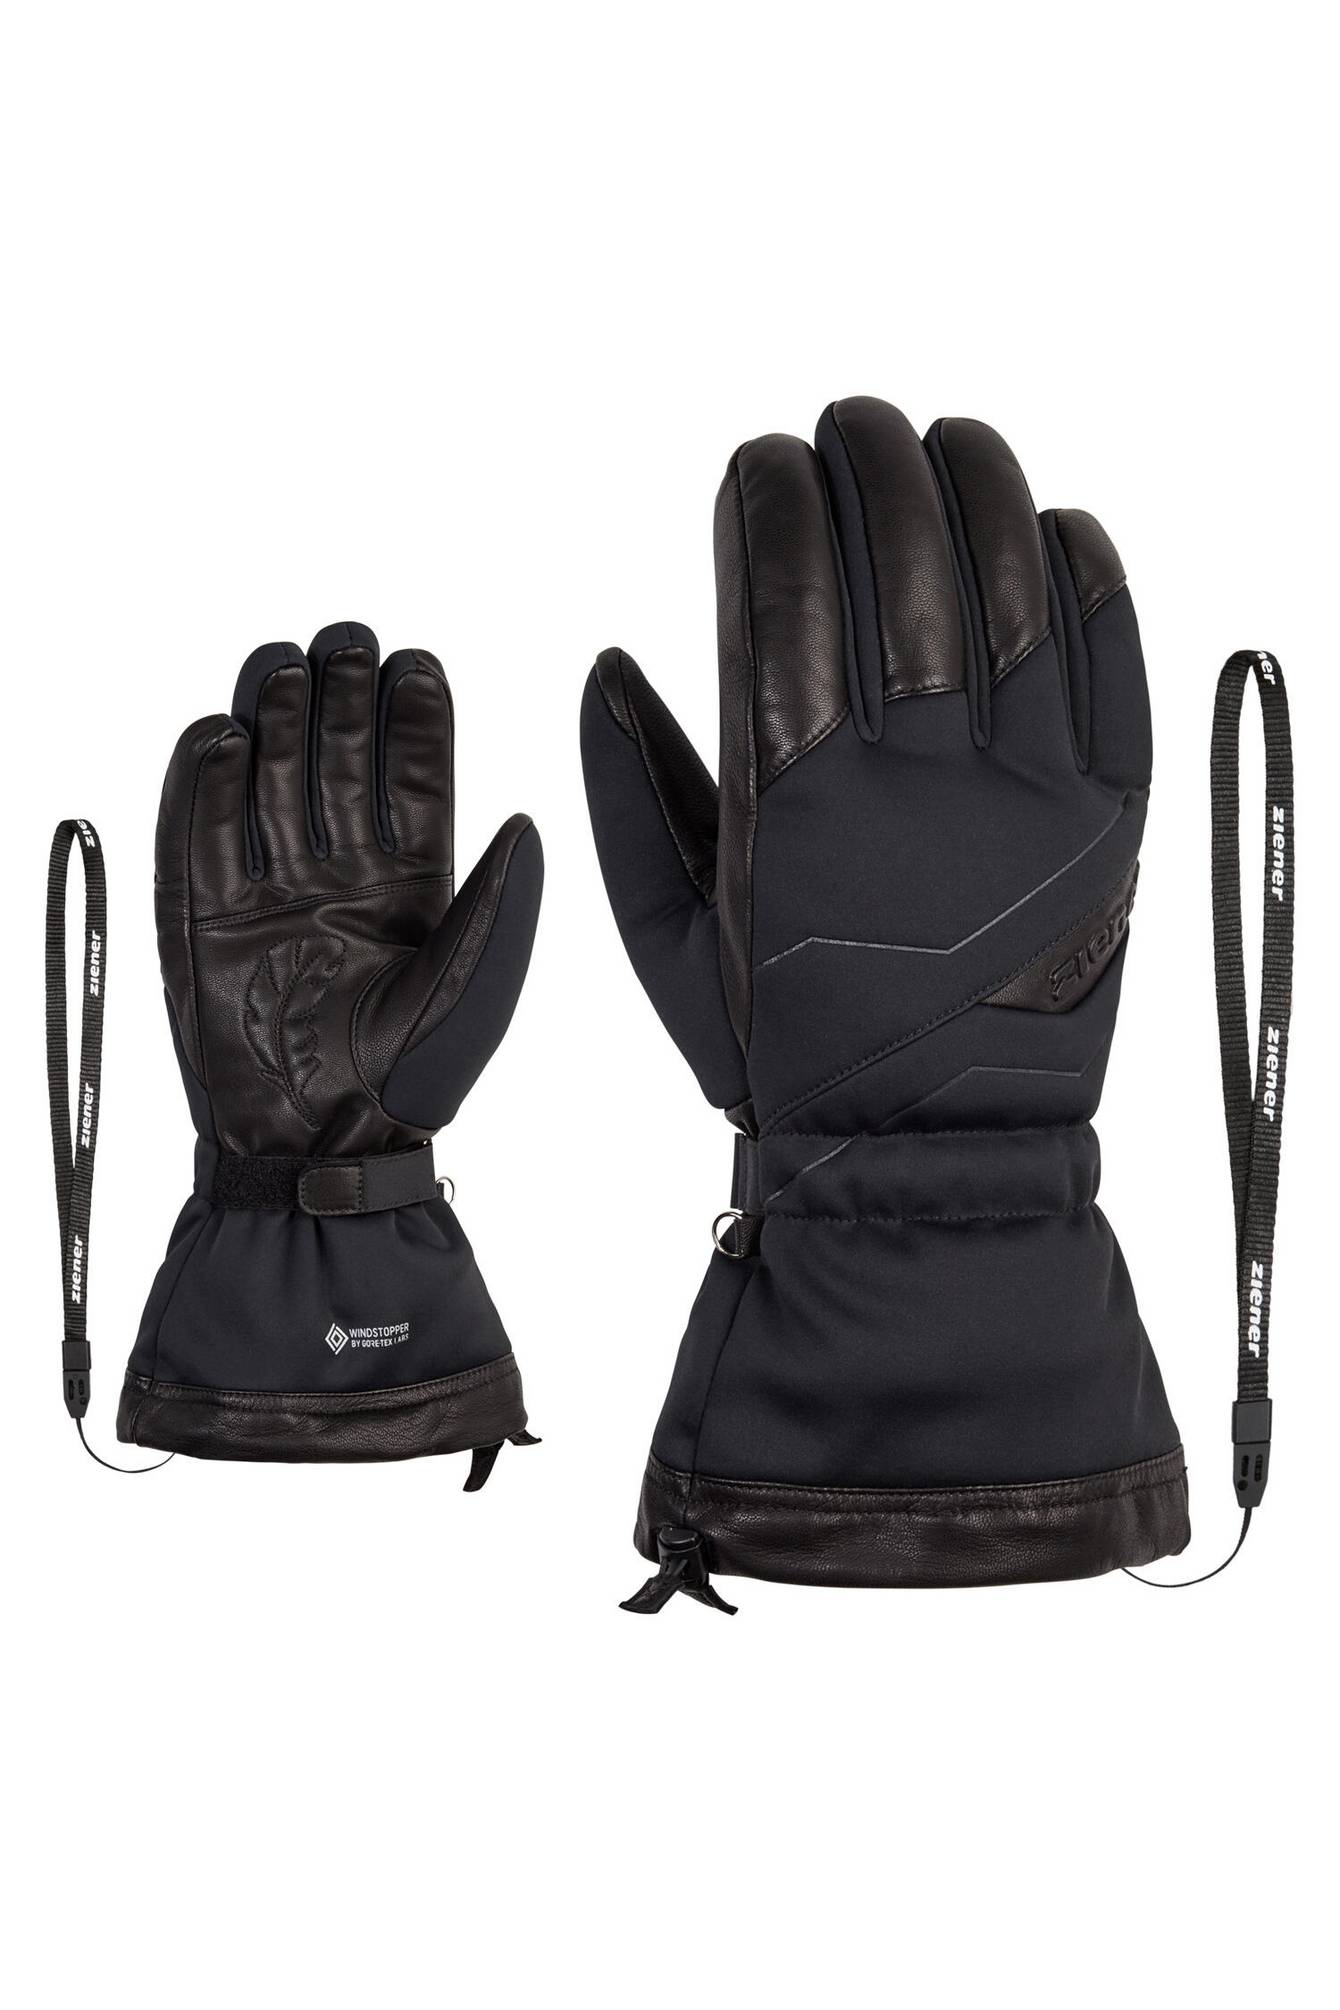 GANNO WS glove ski alpine | L&T